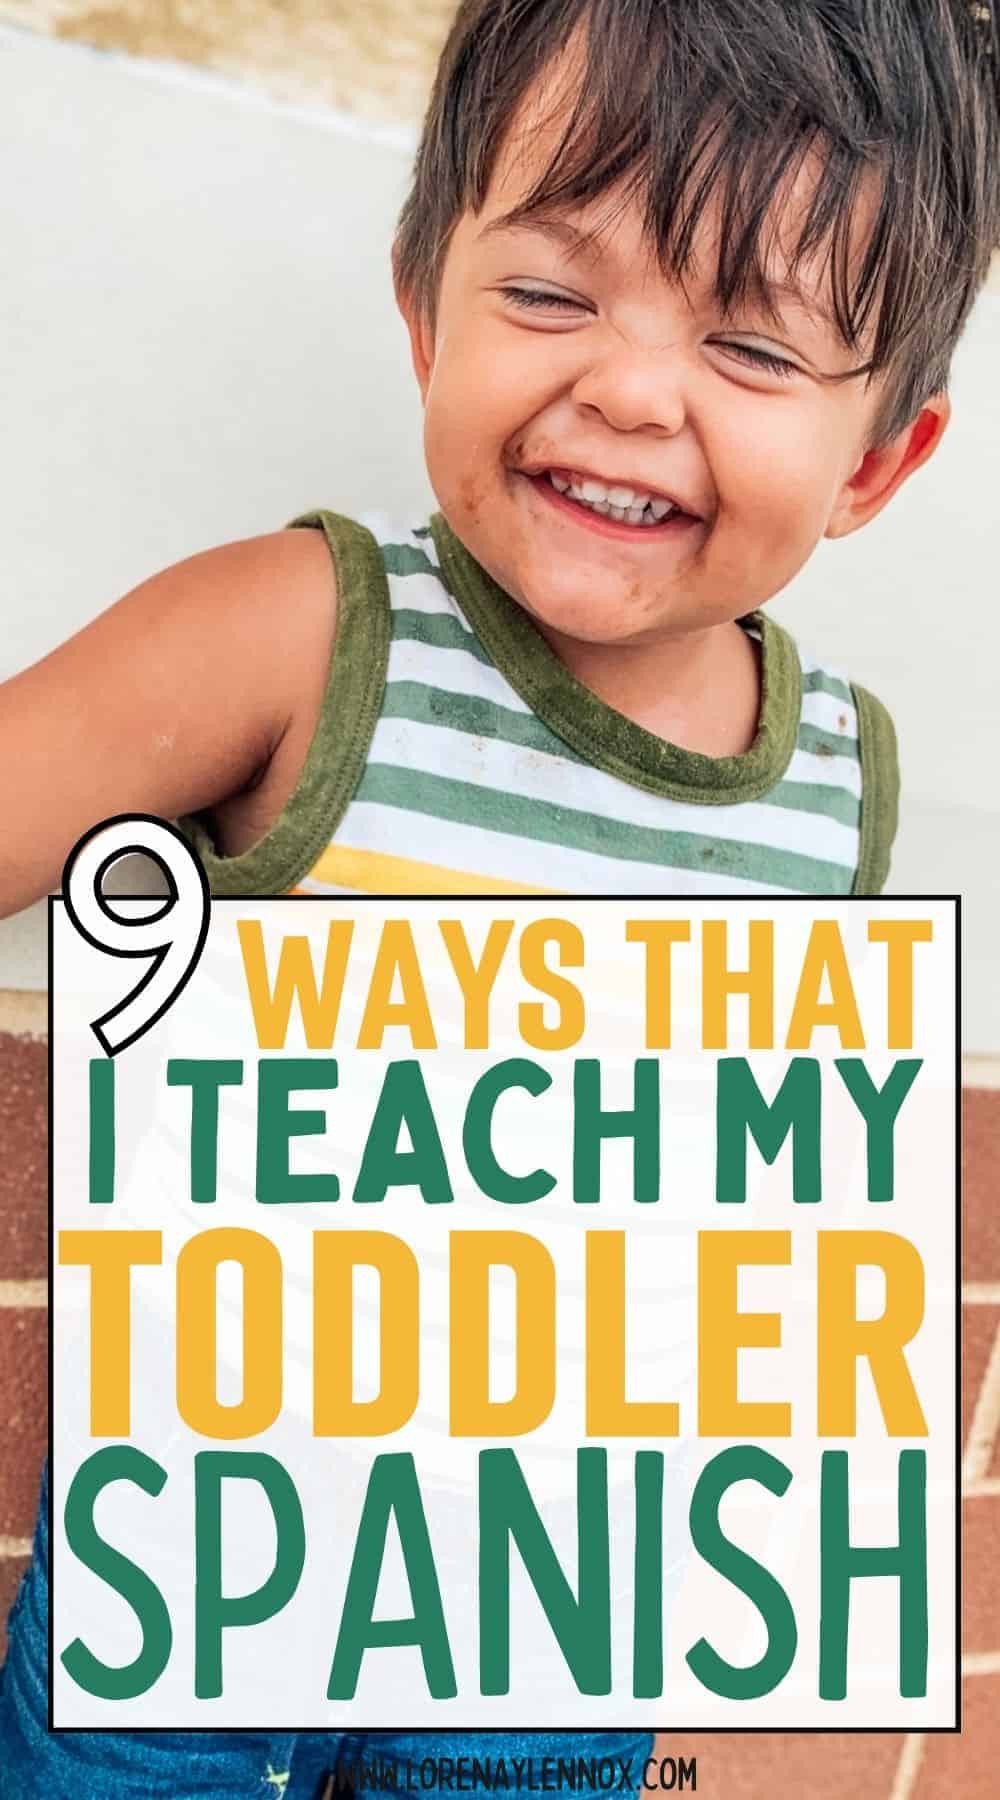 9 Ways That I Teach my Toddler Spanish